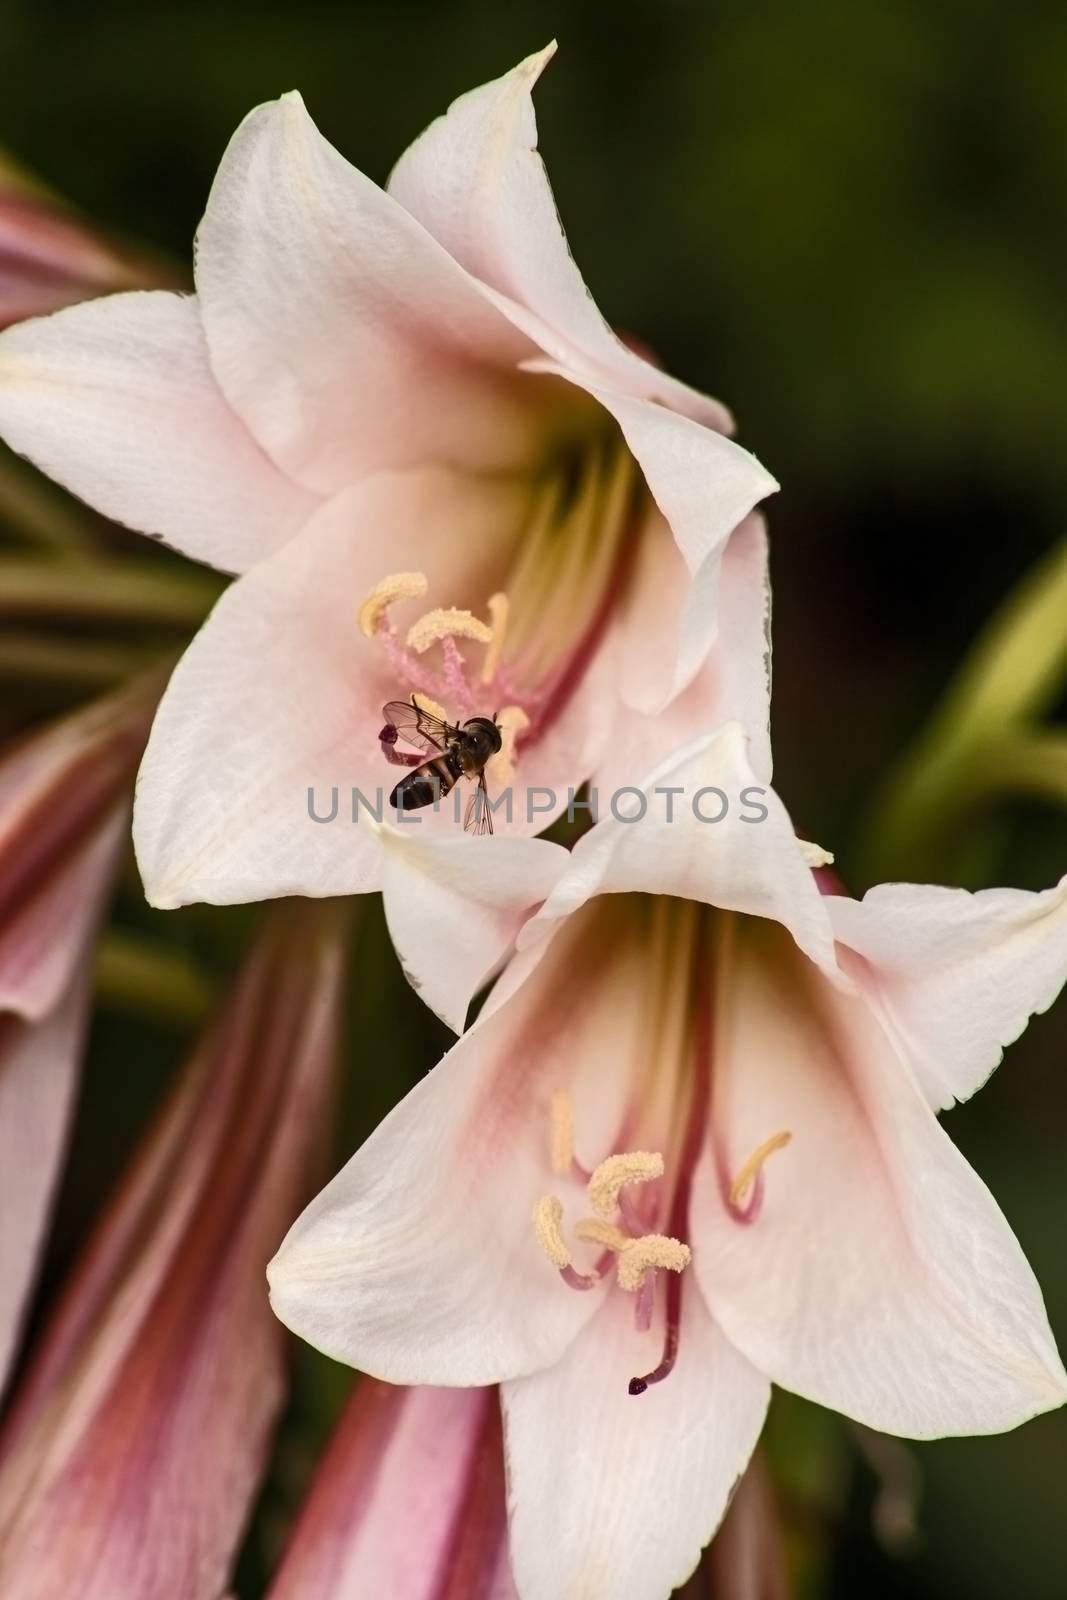 Vaal River Lily (Crinum bulbispermum) by kobus_peche